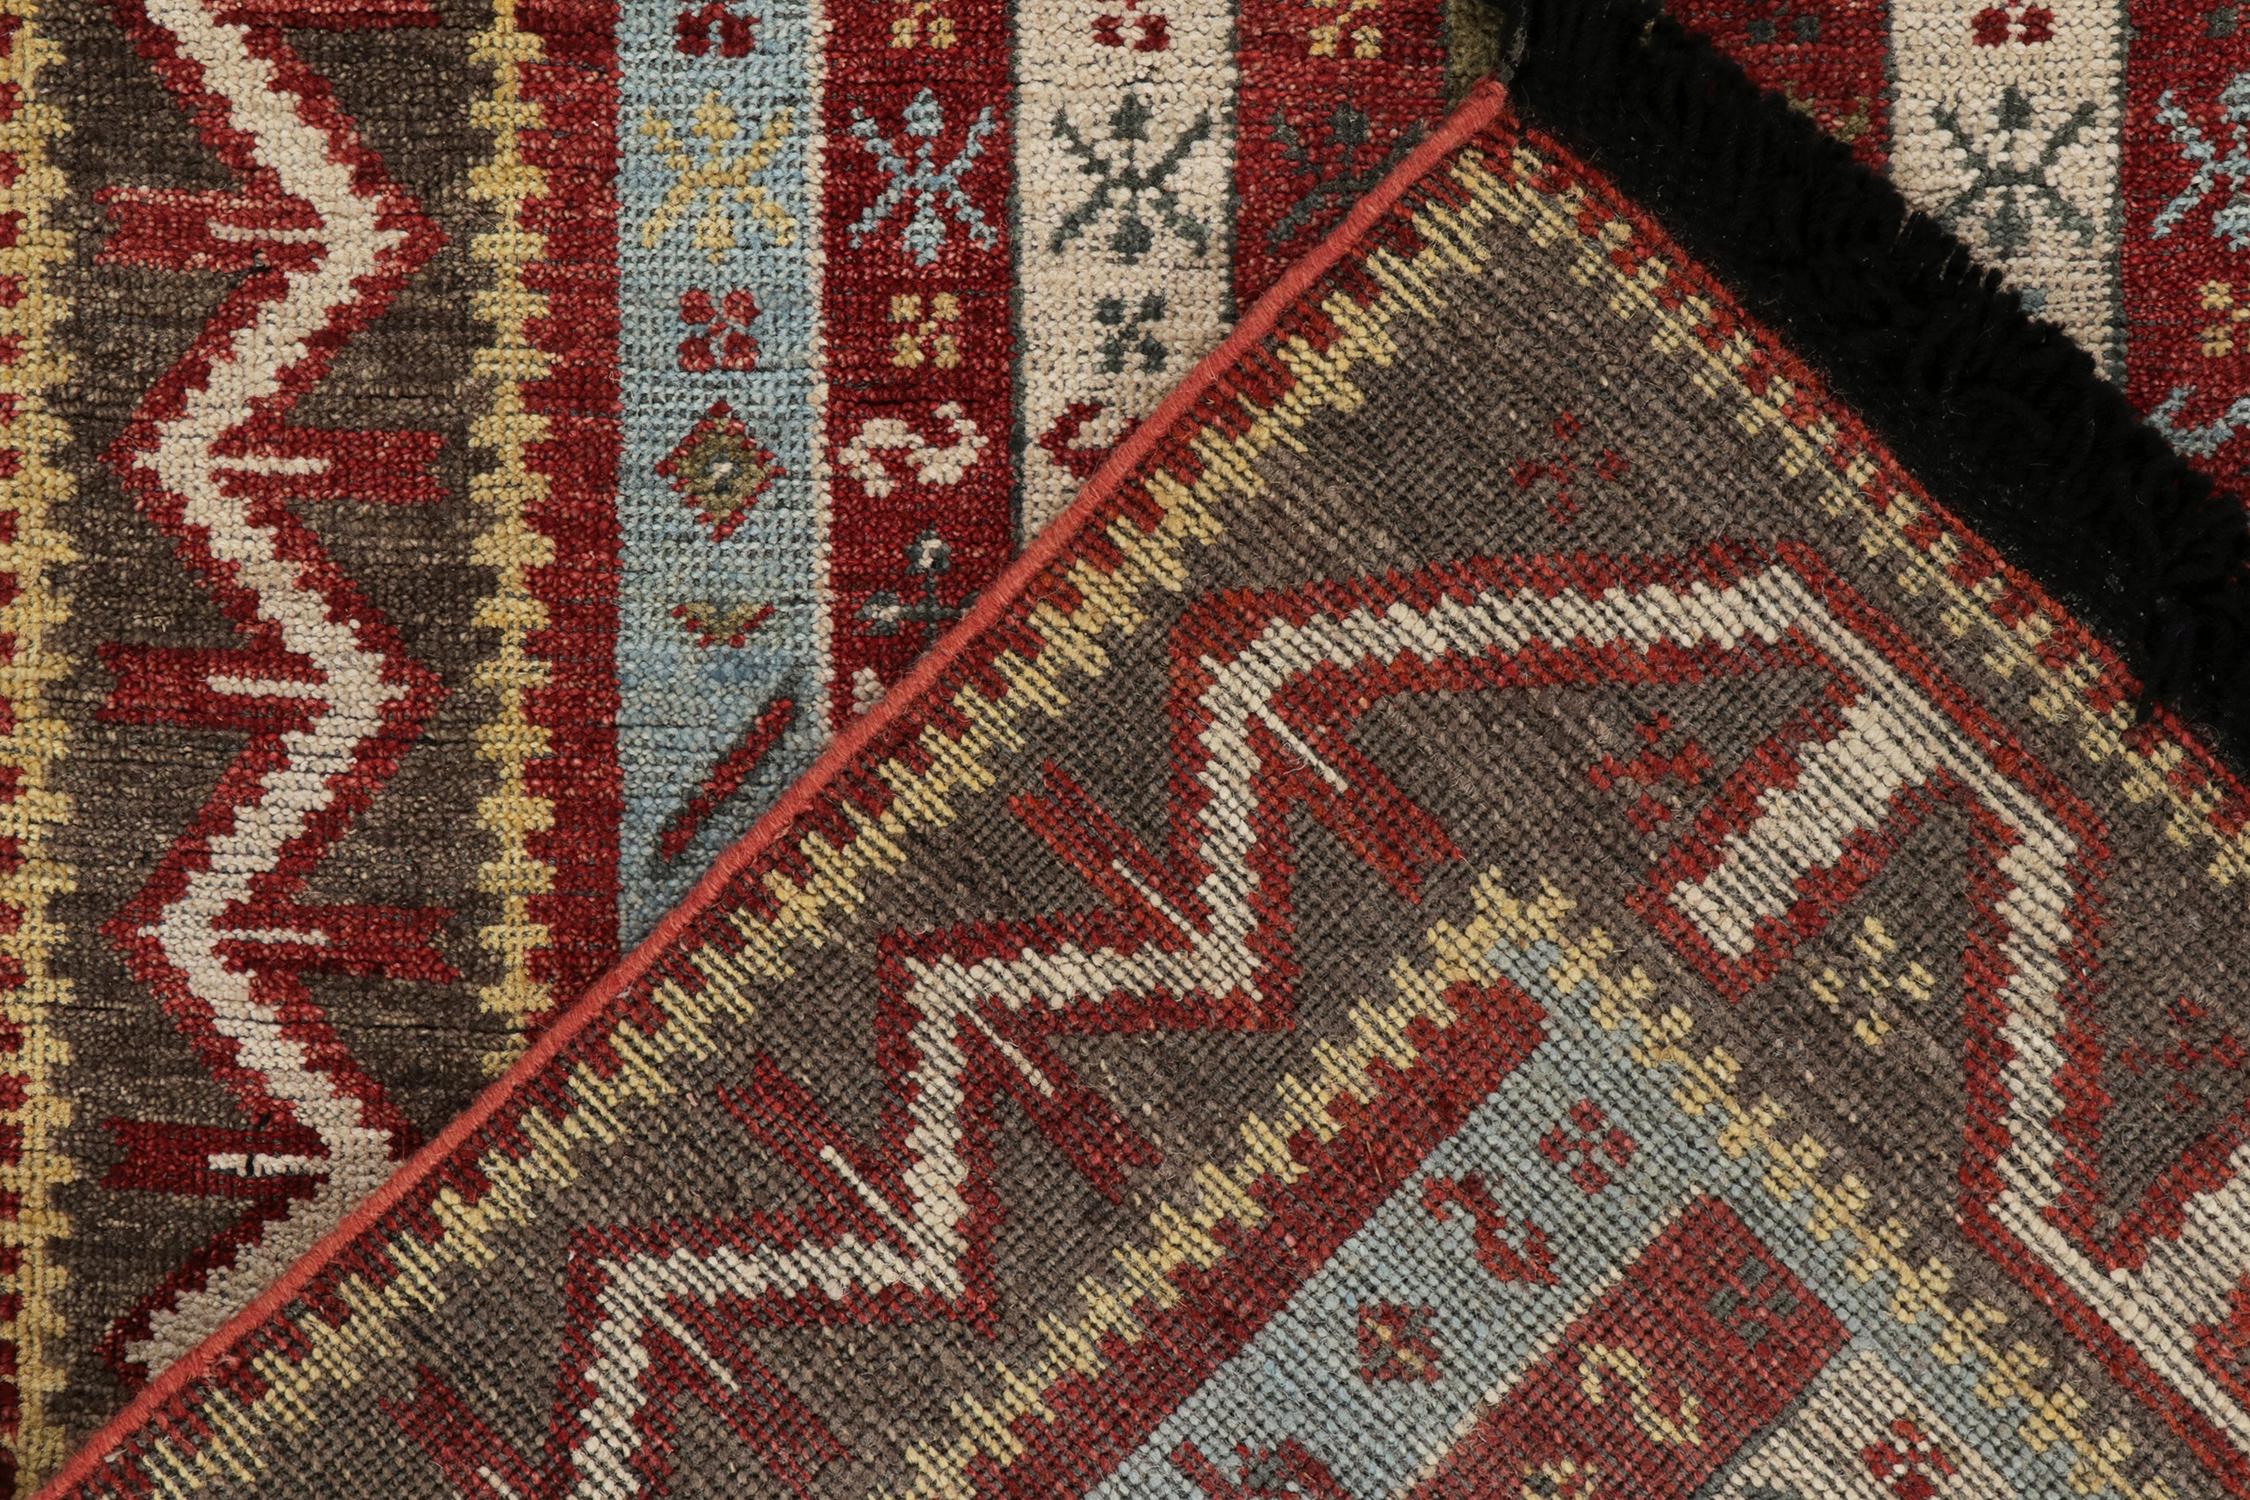 Wool Rug & Kilim's Tribal Style runner in Multicolor Stripes, Geometric Pattern